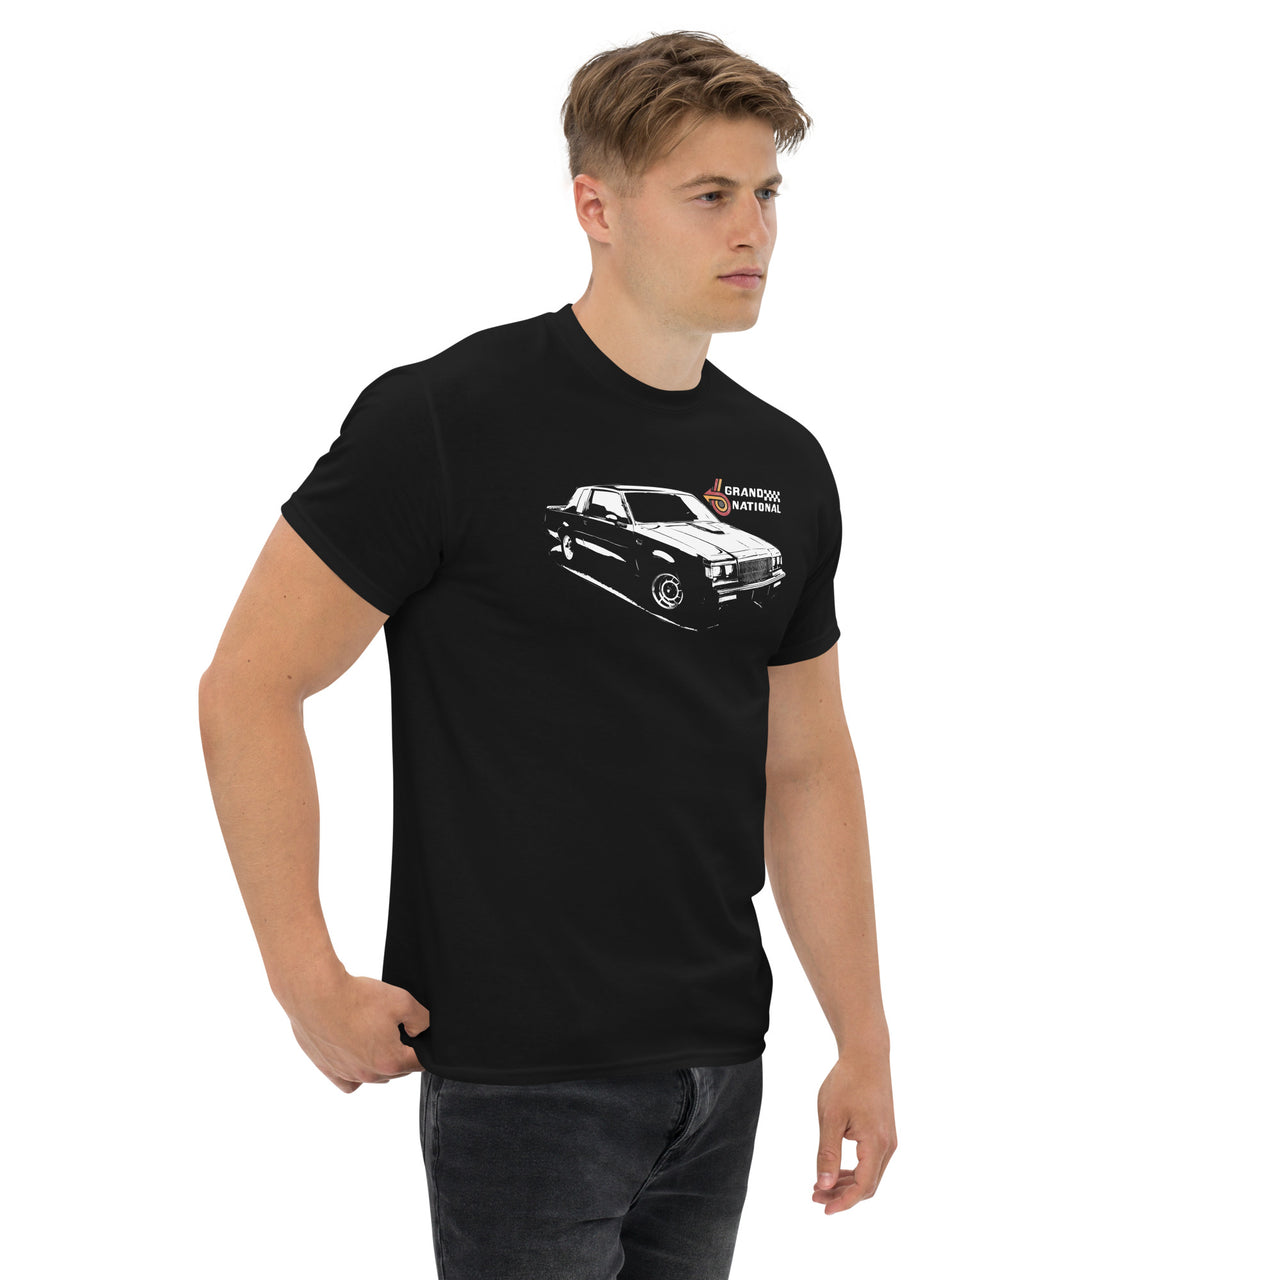 Grand National T-Shirt modeled in Black